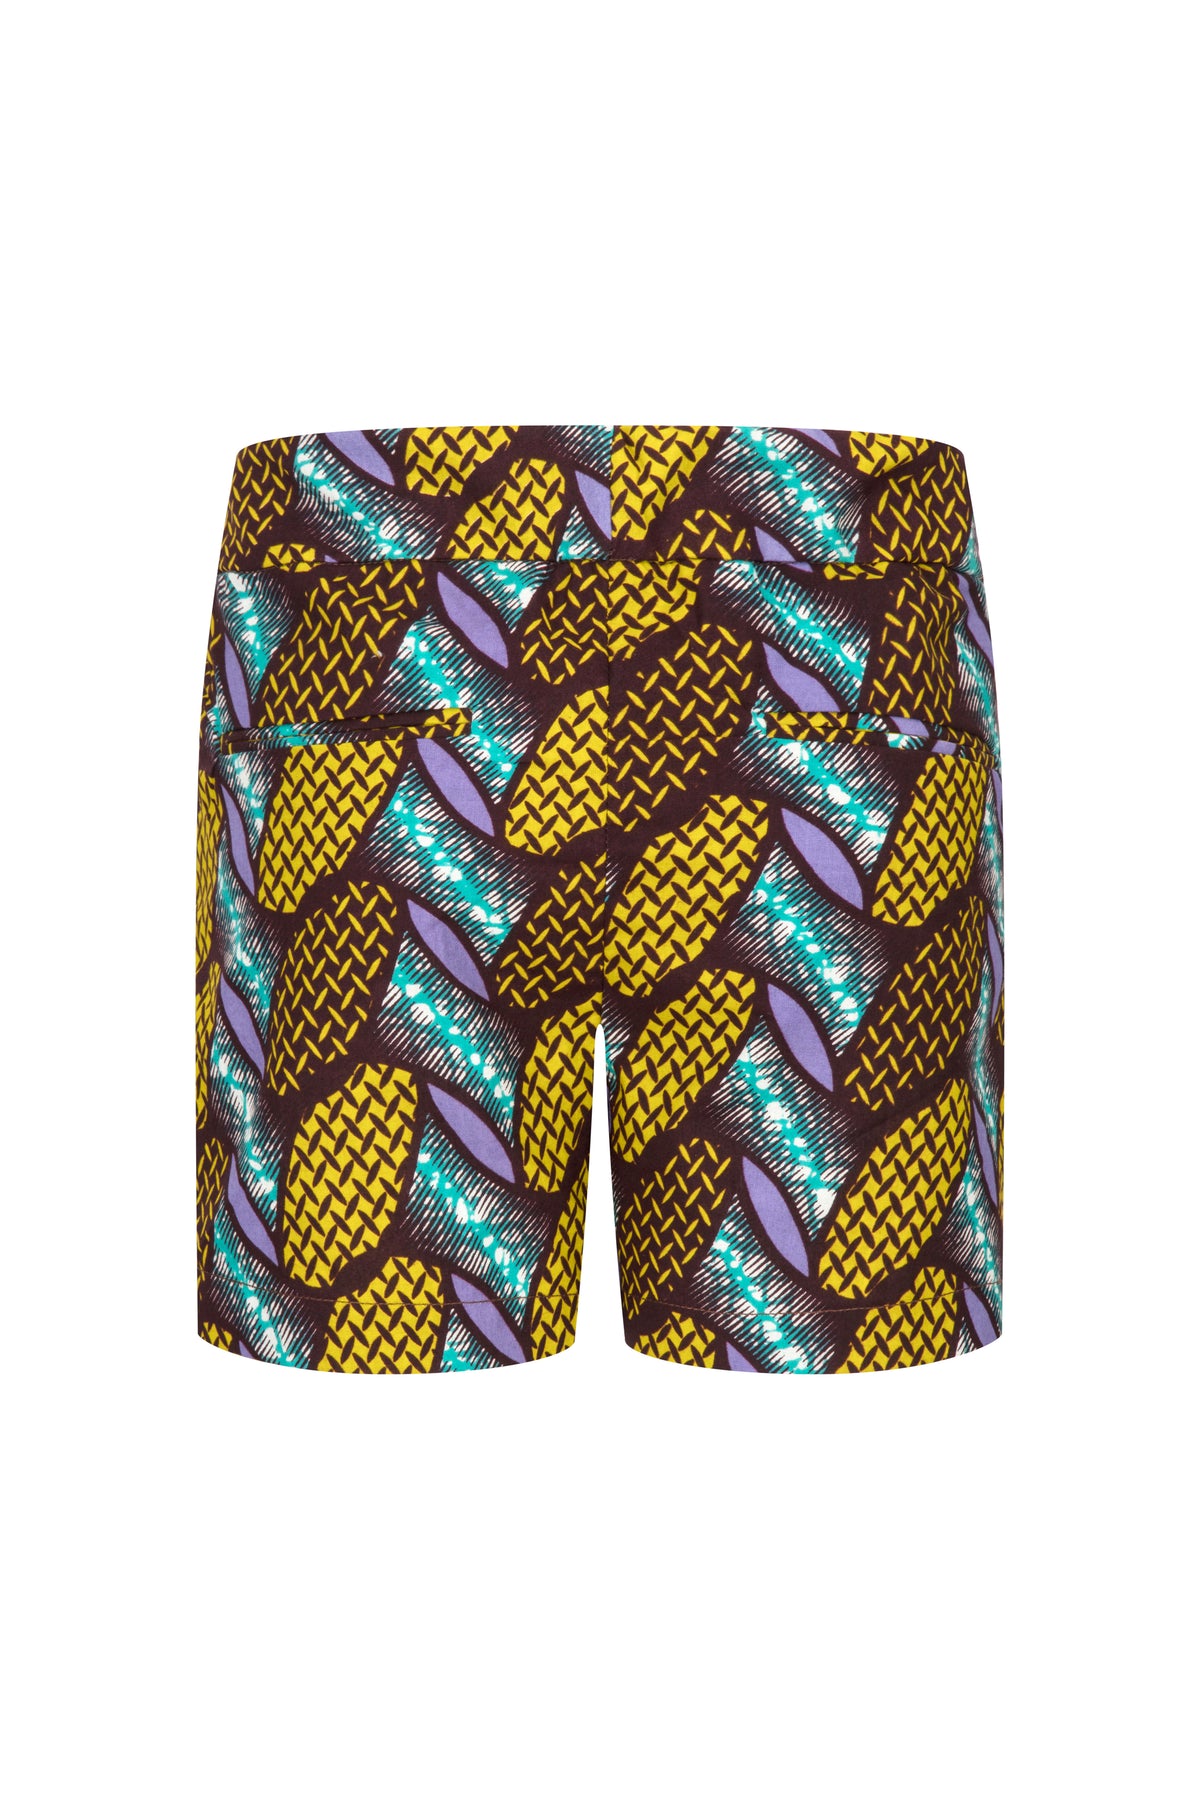 Boys African print shirt and shorts set- BLU - OHEMA OHENE AFRICAN INSPIRED FASHION